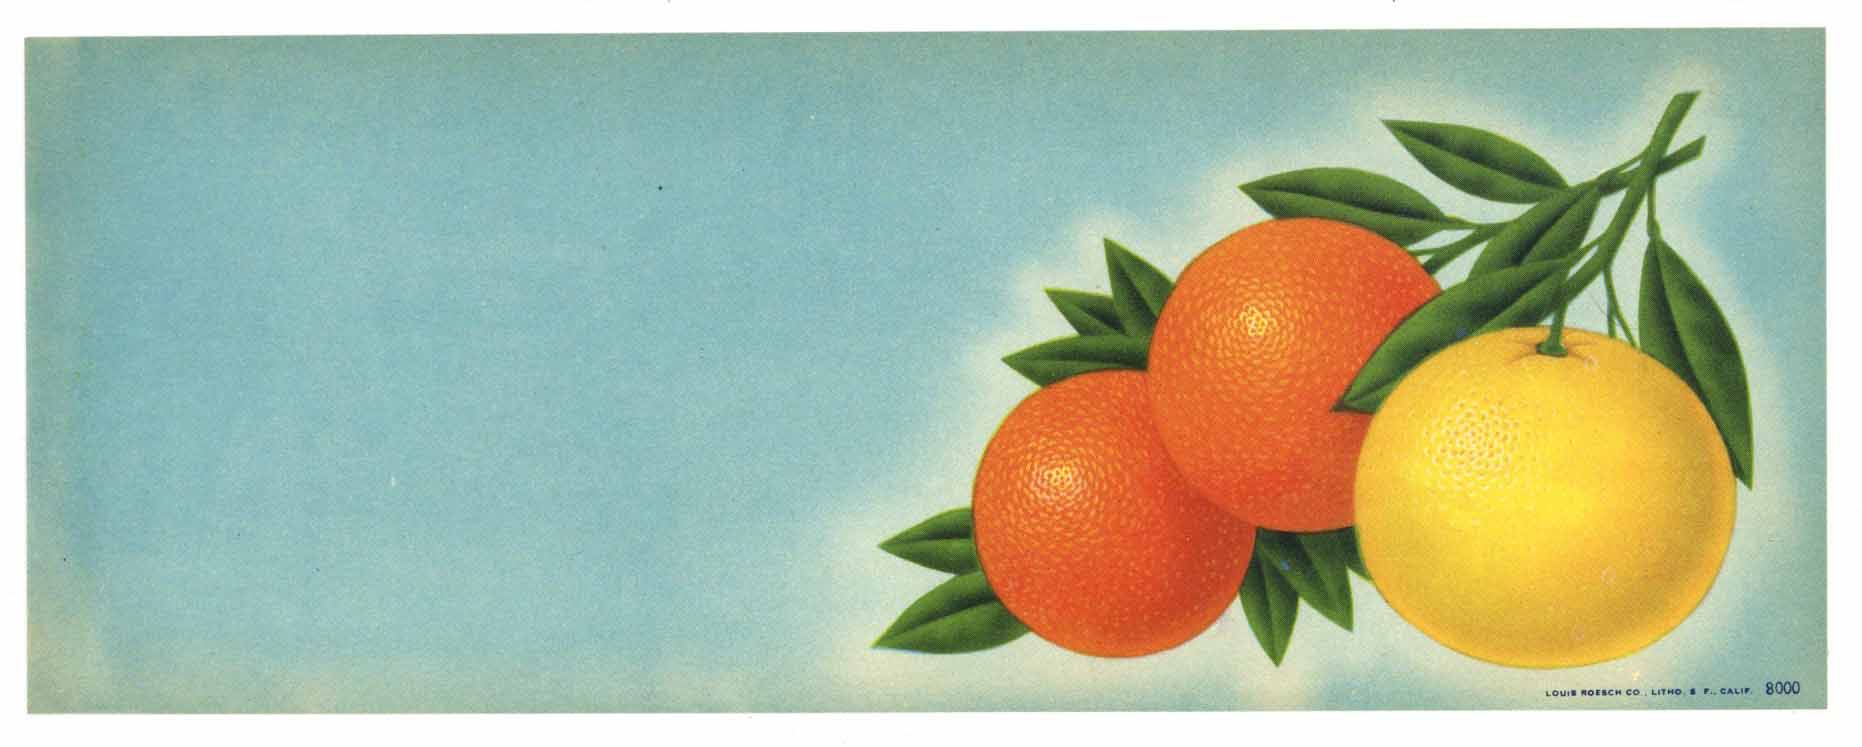 Stock #8000 Vintage Florida Citrus Crate Label